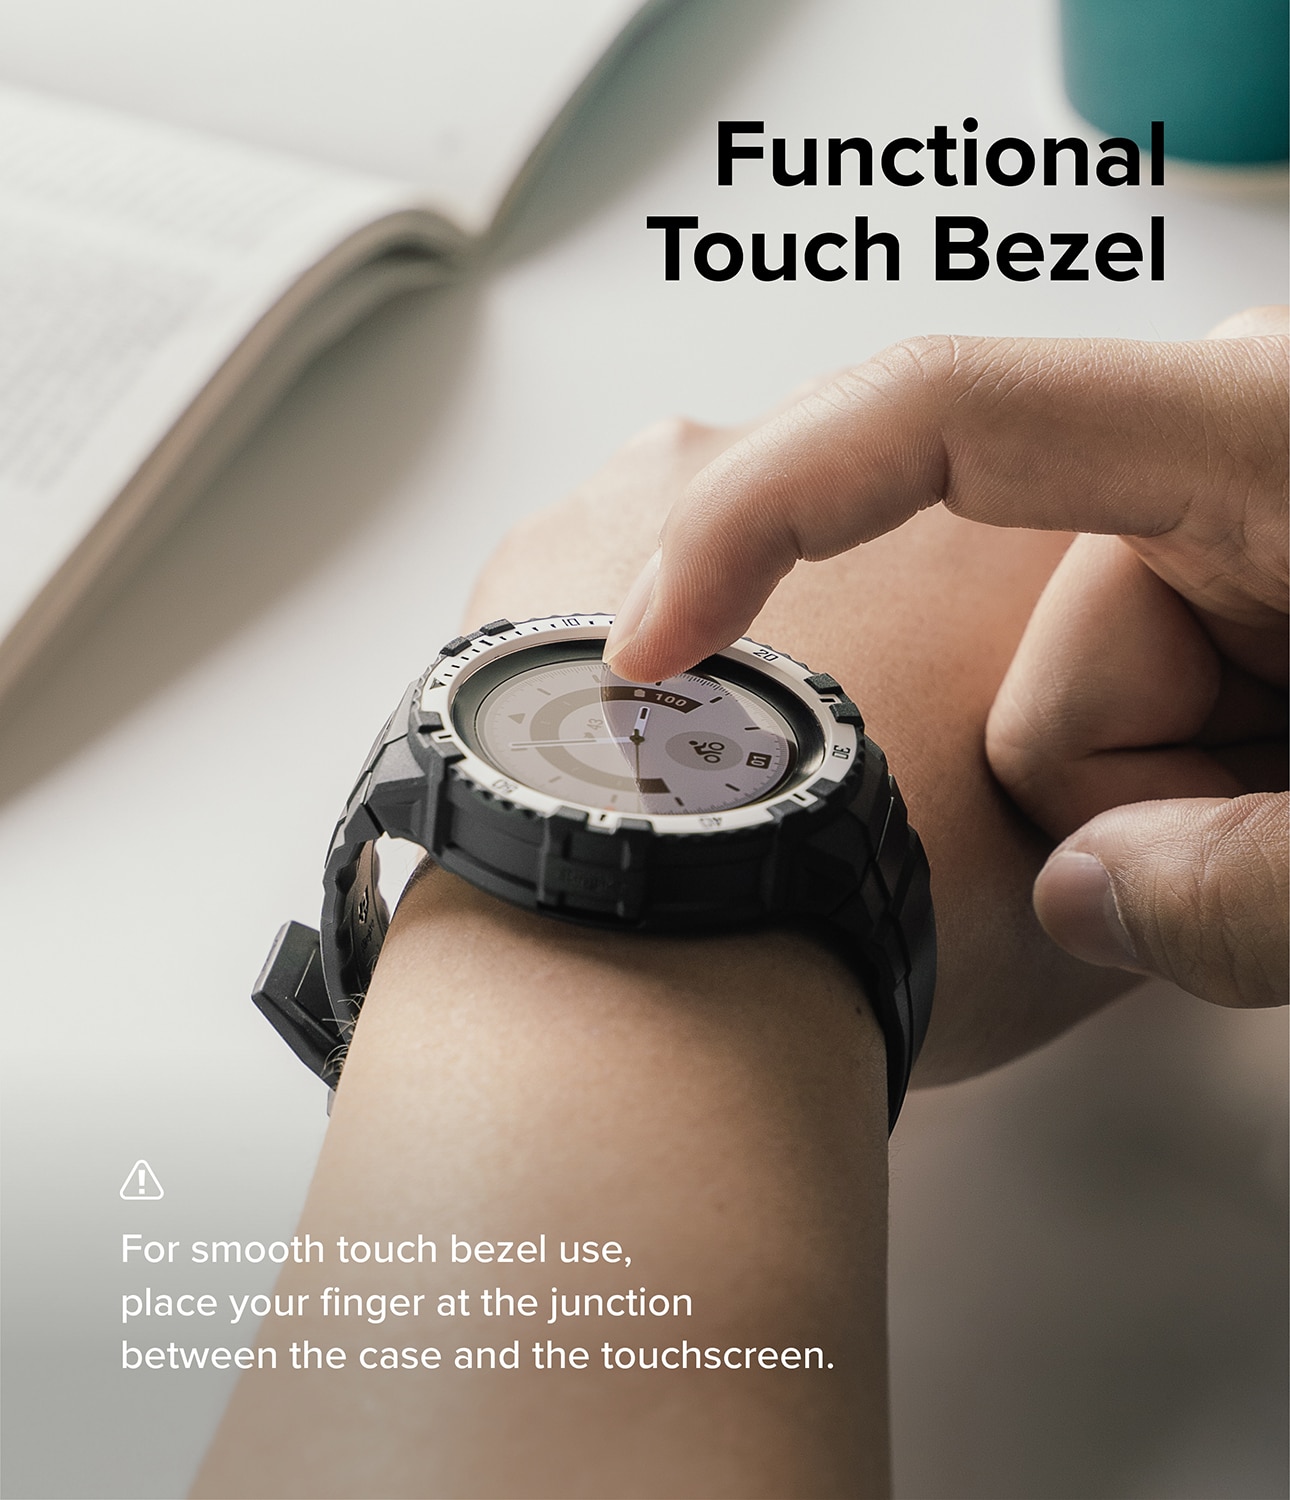 Fusion X Case Samsung Galaxy Watch 5 Pro 45mm White (Black Index)